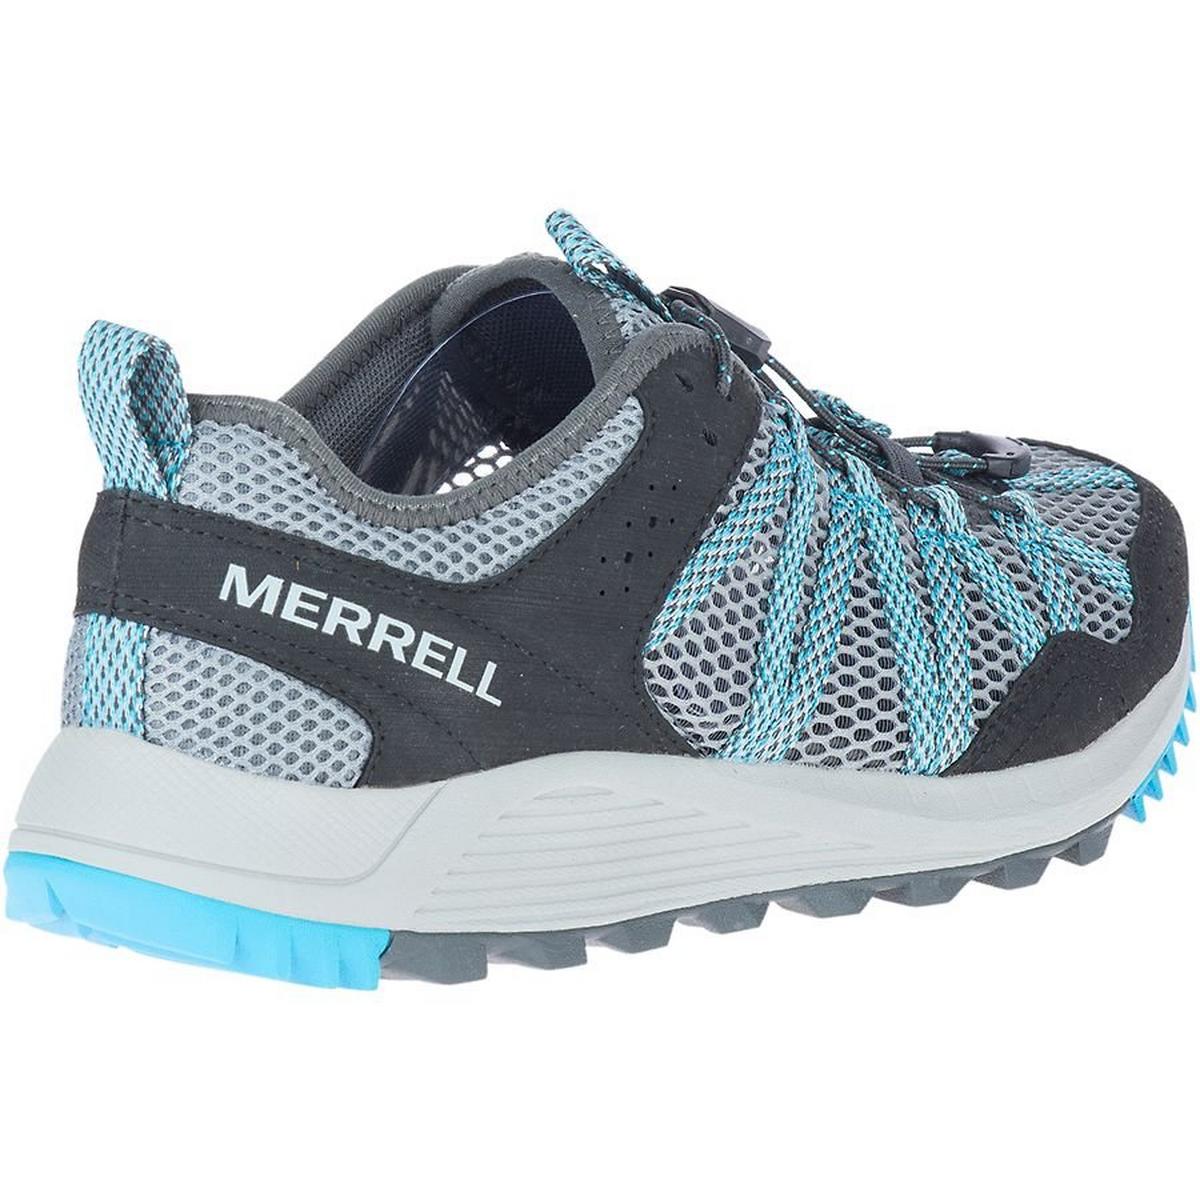 Merrell Women's Wildwood Aerosport Shoe - Blue/Grey